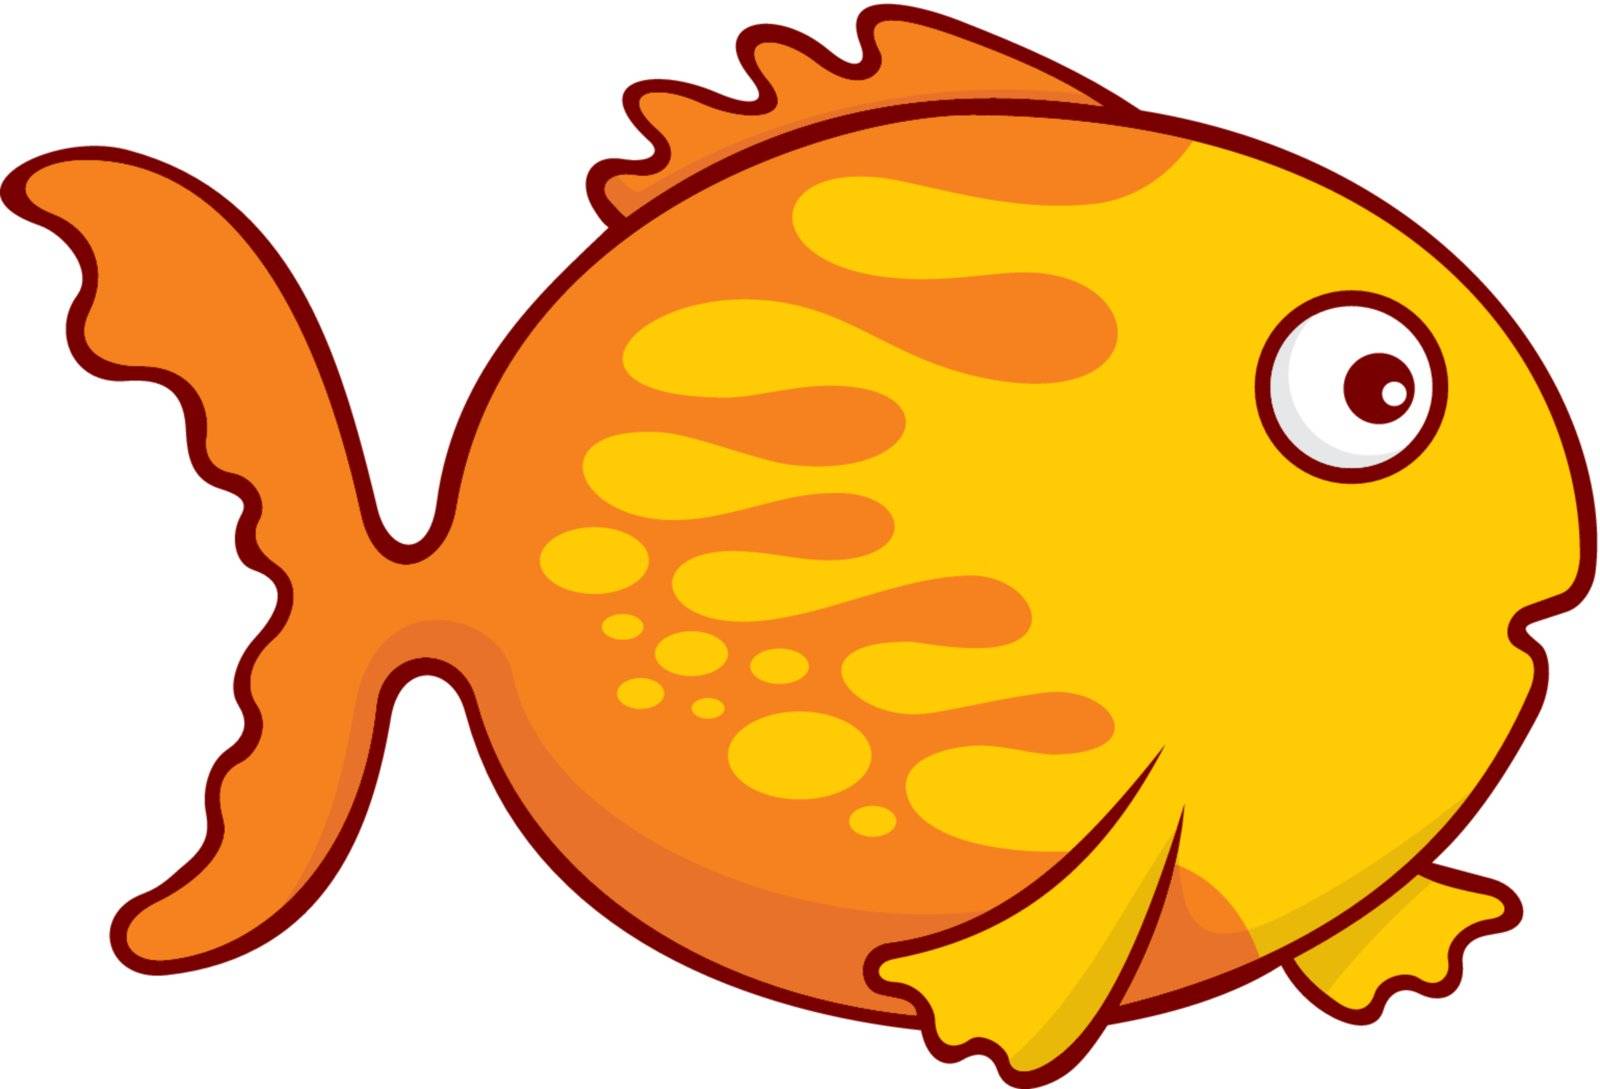 Goldfish cartoon by sifis